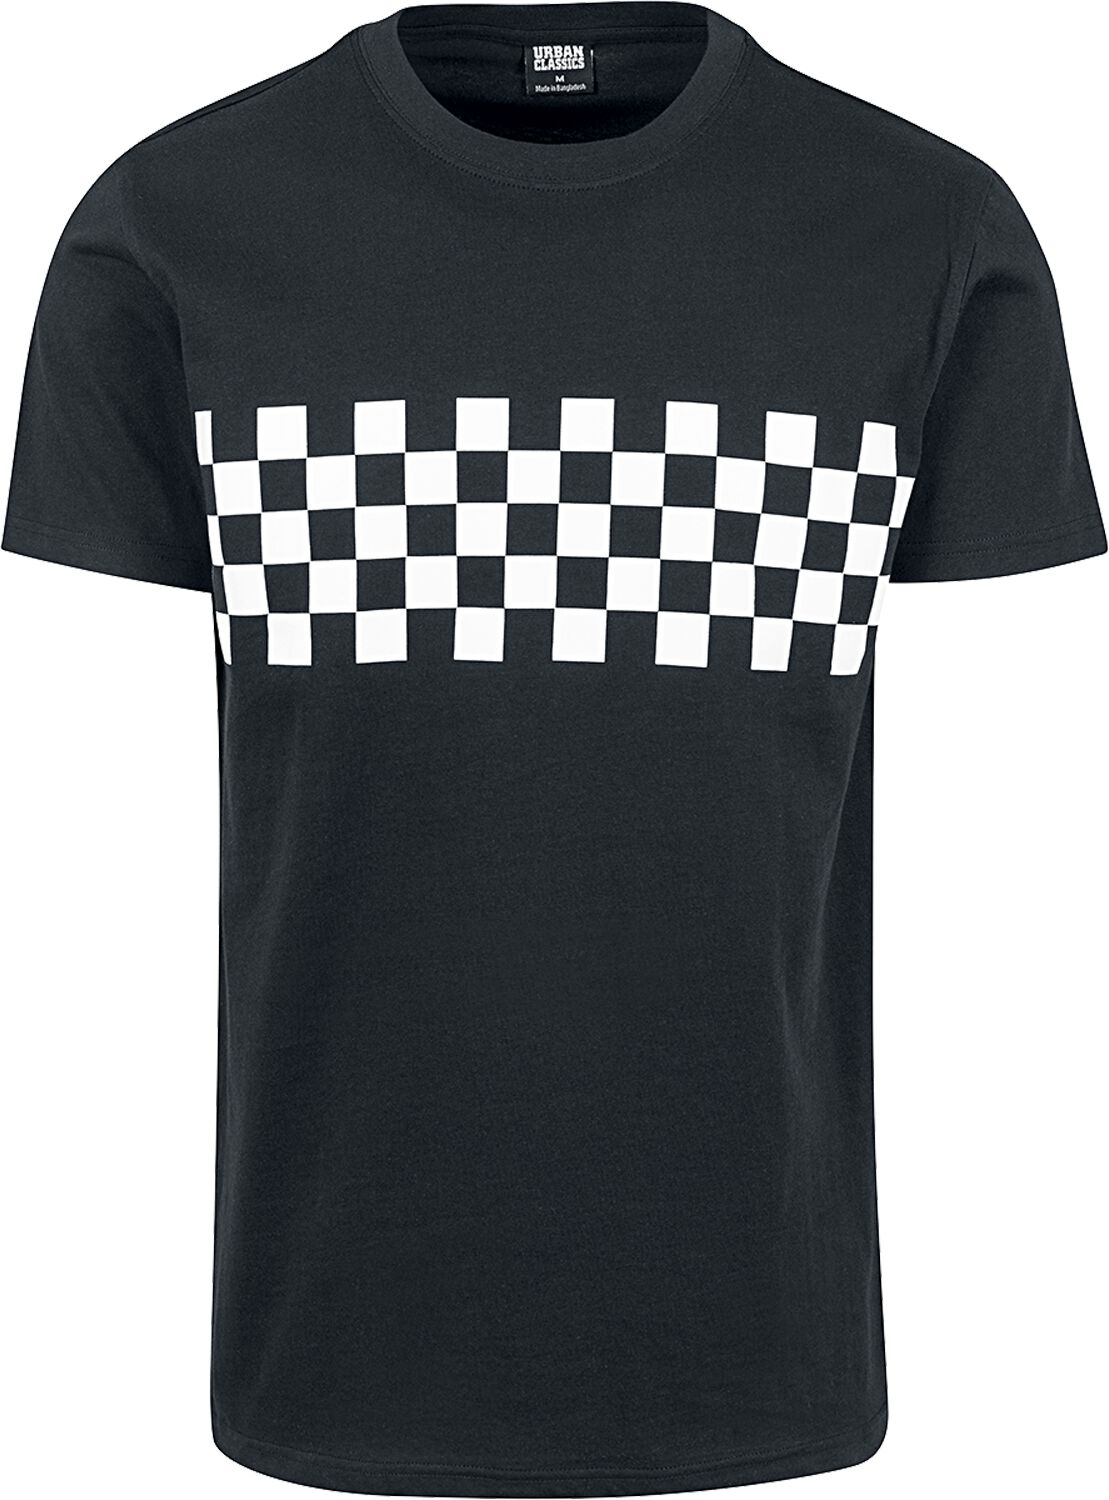 Urban Classics Check Panel Tee T-Shirt schwarz in XL